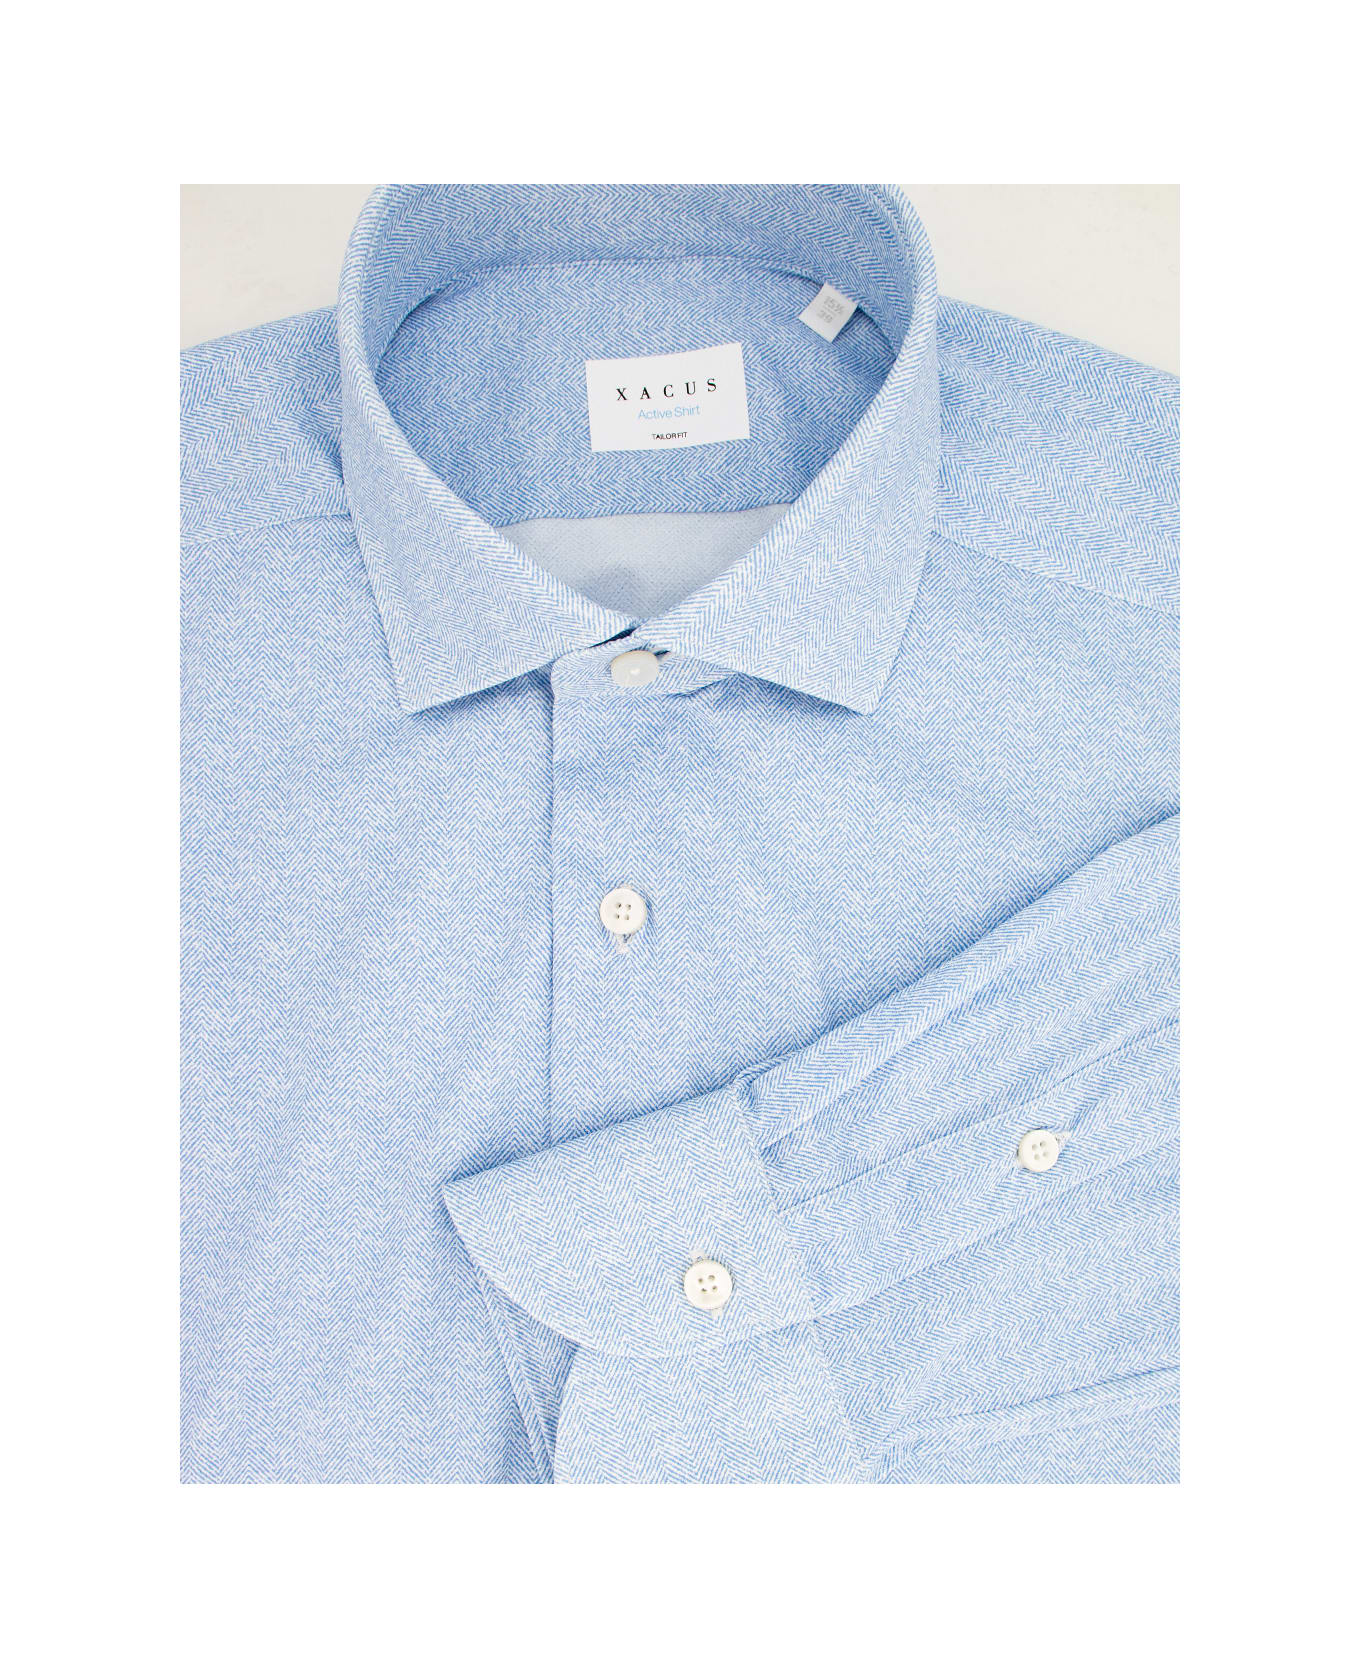 Xacus Shirt - BLUE MELANGE シャツ